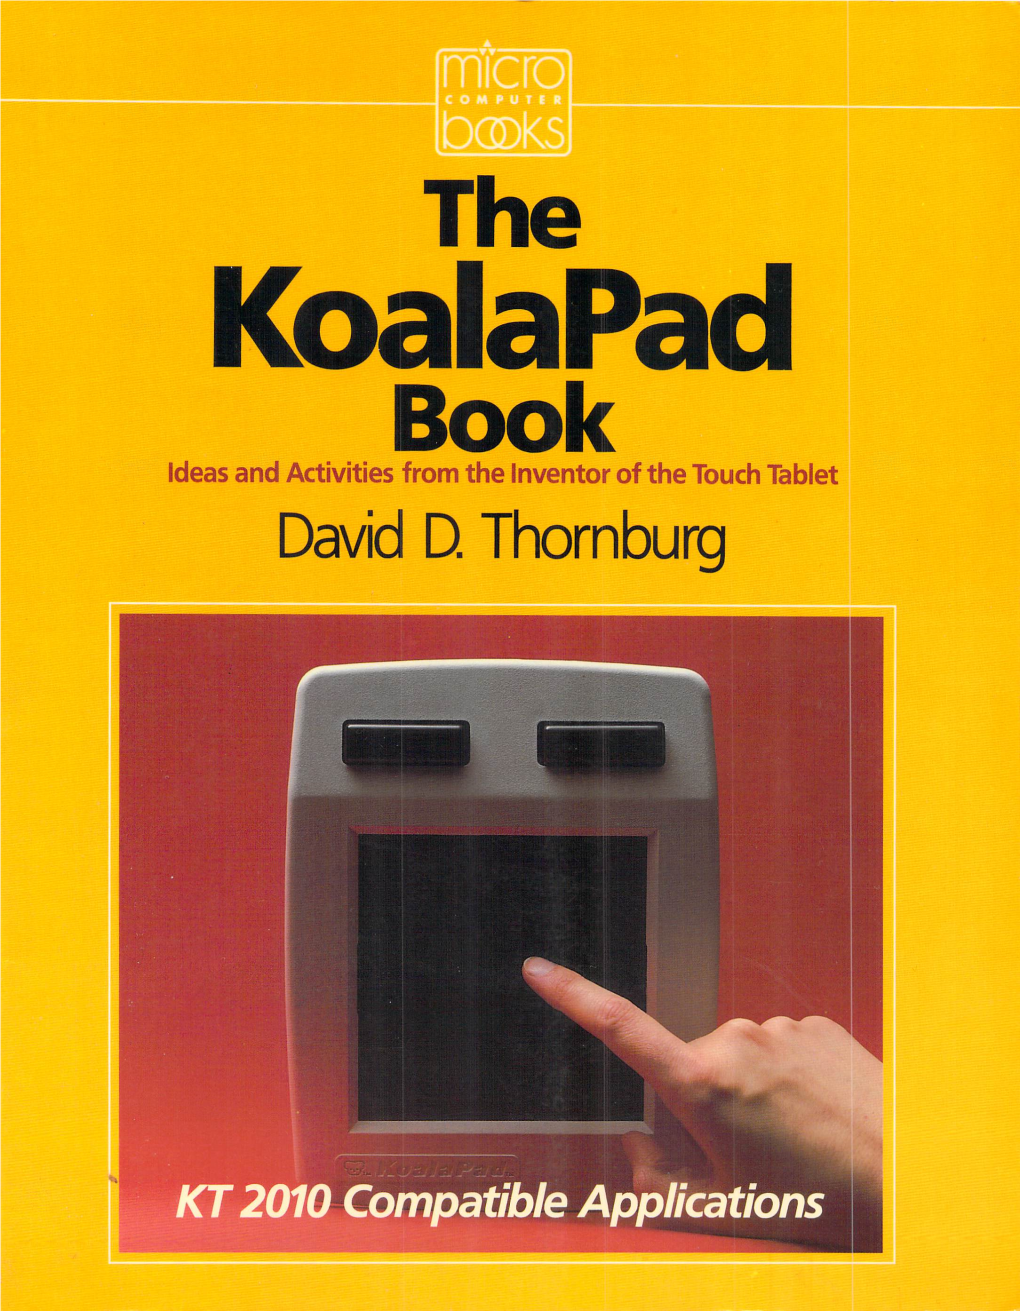 The Koalapad Book